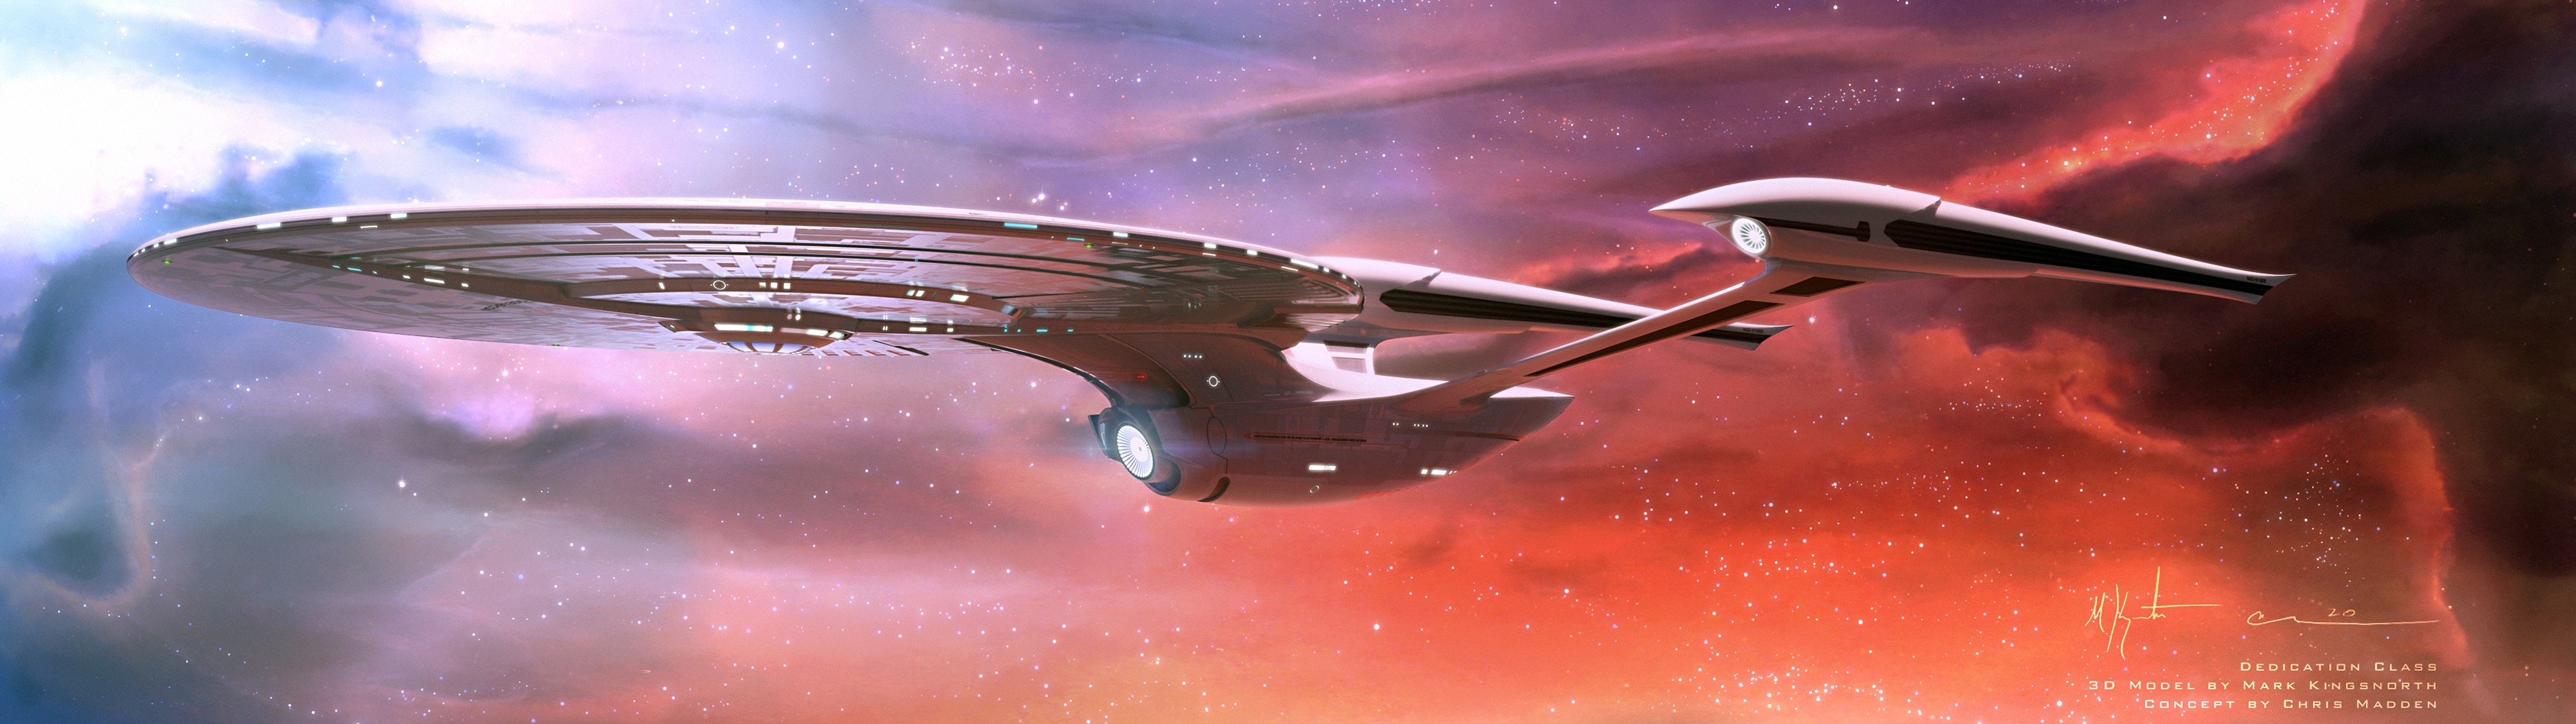 3840x1080 General  Star Trek USS Enterprise (spaceship) space nebula multiple  display dual monitors